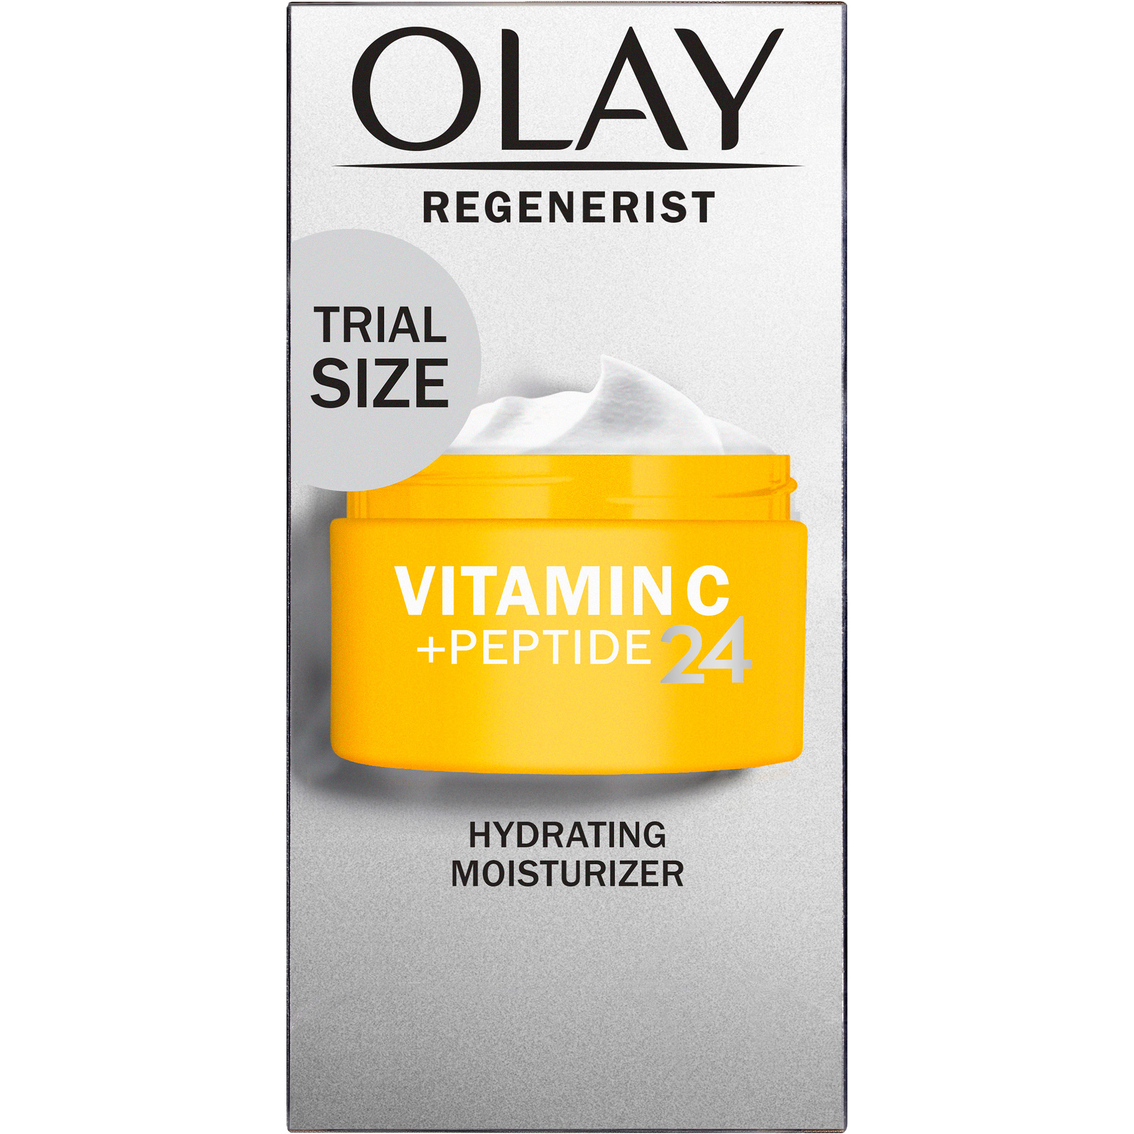 Olay Regenerist Vitamin C and Peptide 24 Face Moisturizer - Image 2 of 2